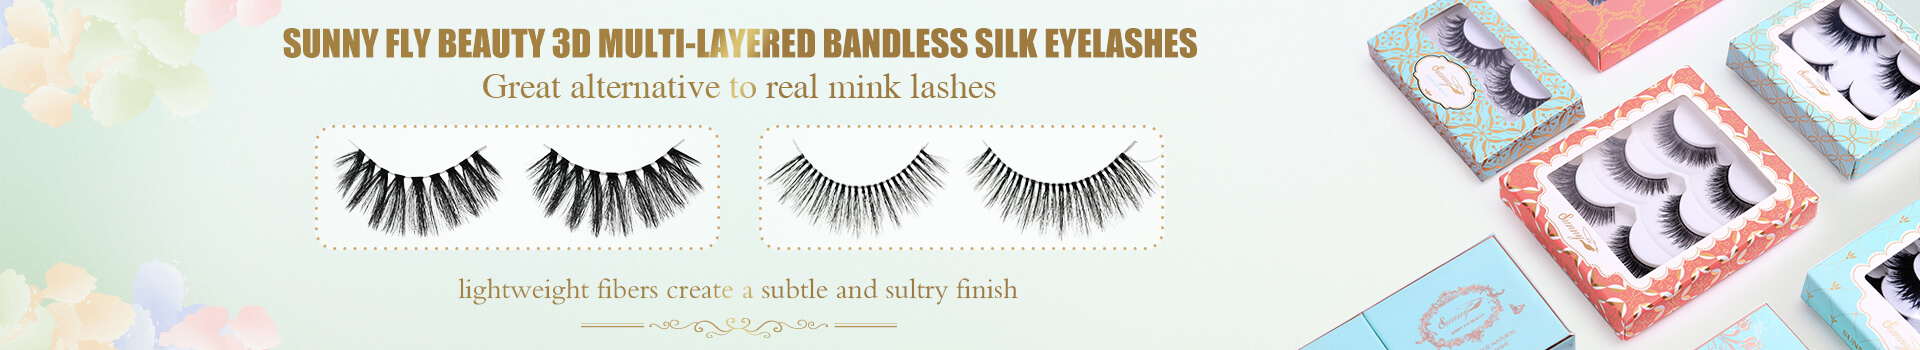 3D Multi-Layered Bandless Silk Eyelas TA04